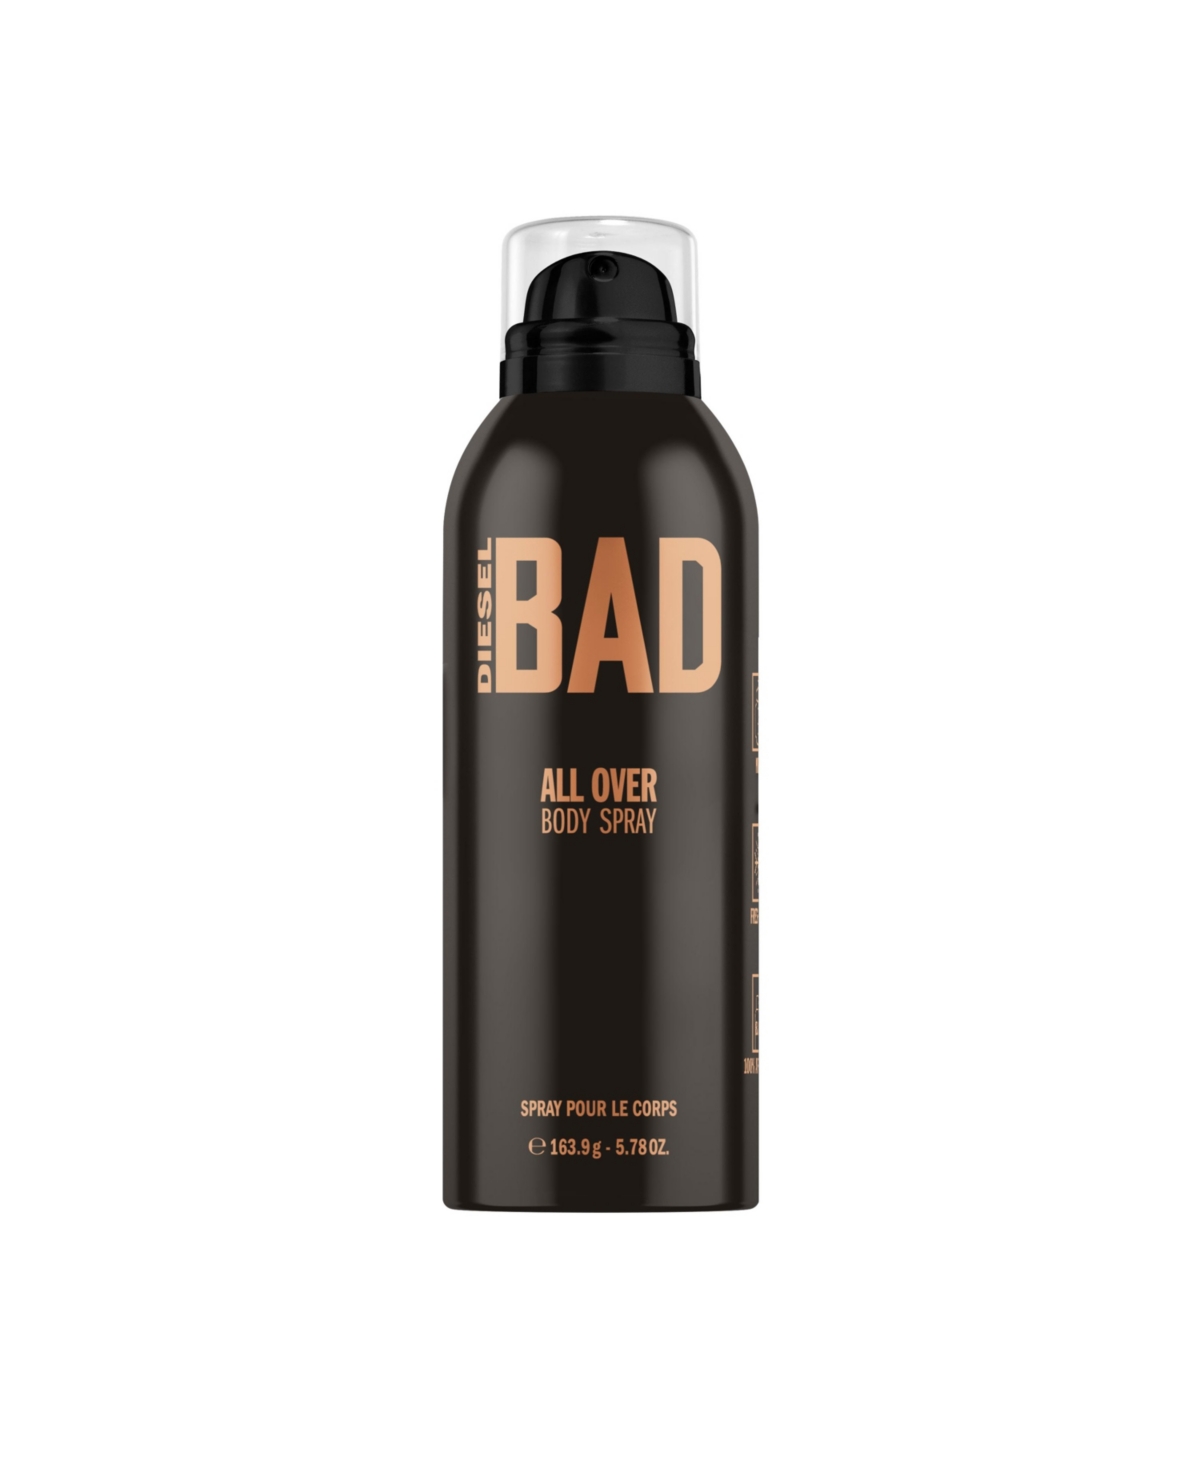 Bad All Over Body Spray, 5.78 oz.